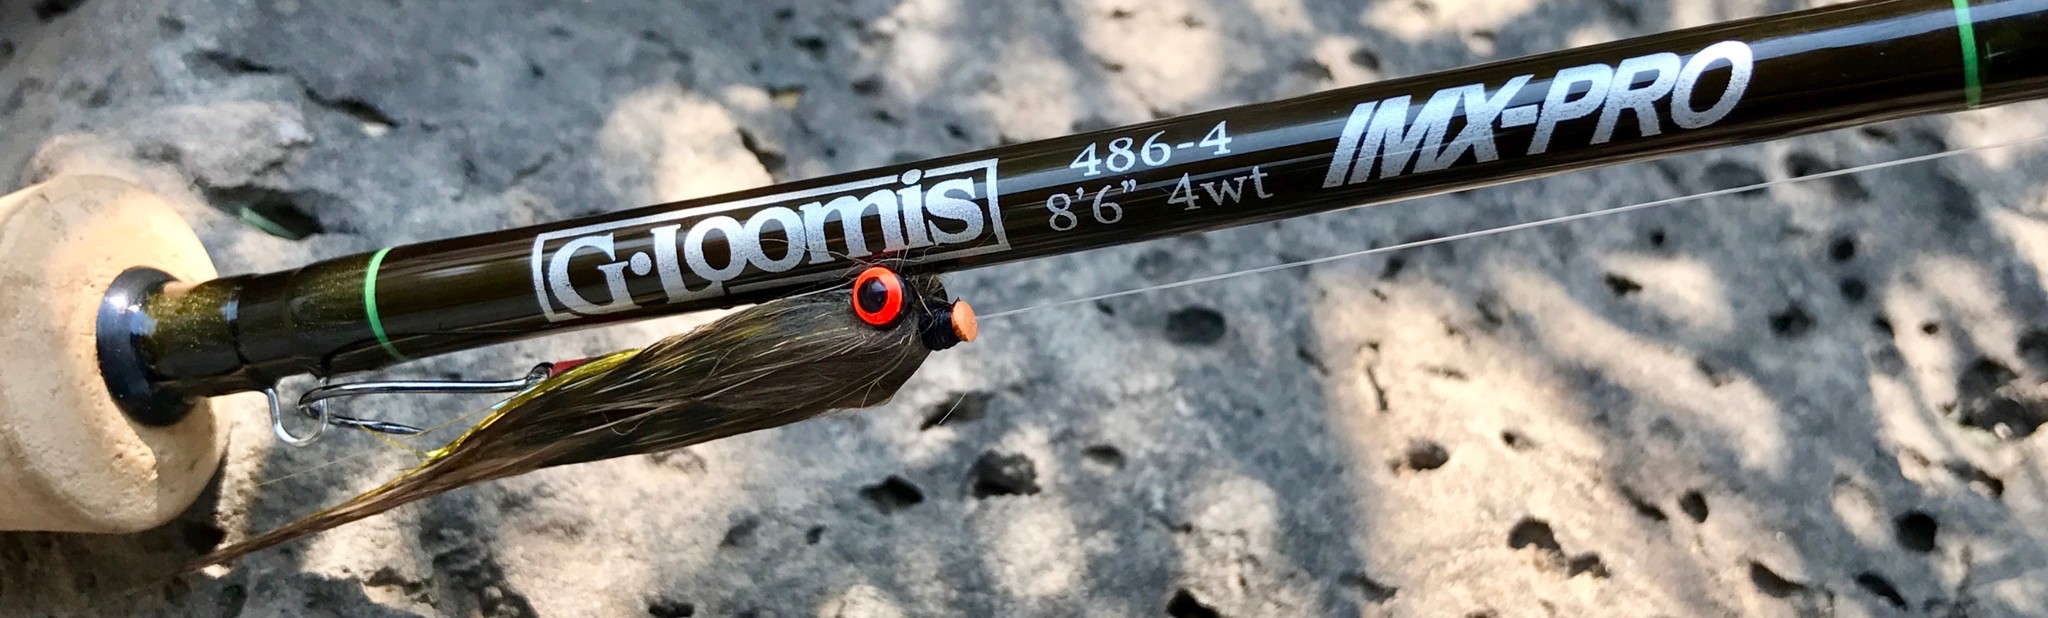 G Loomis IMX Pro 486 Fly rod 